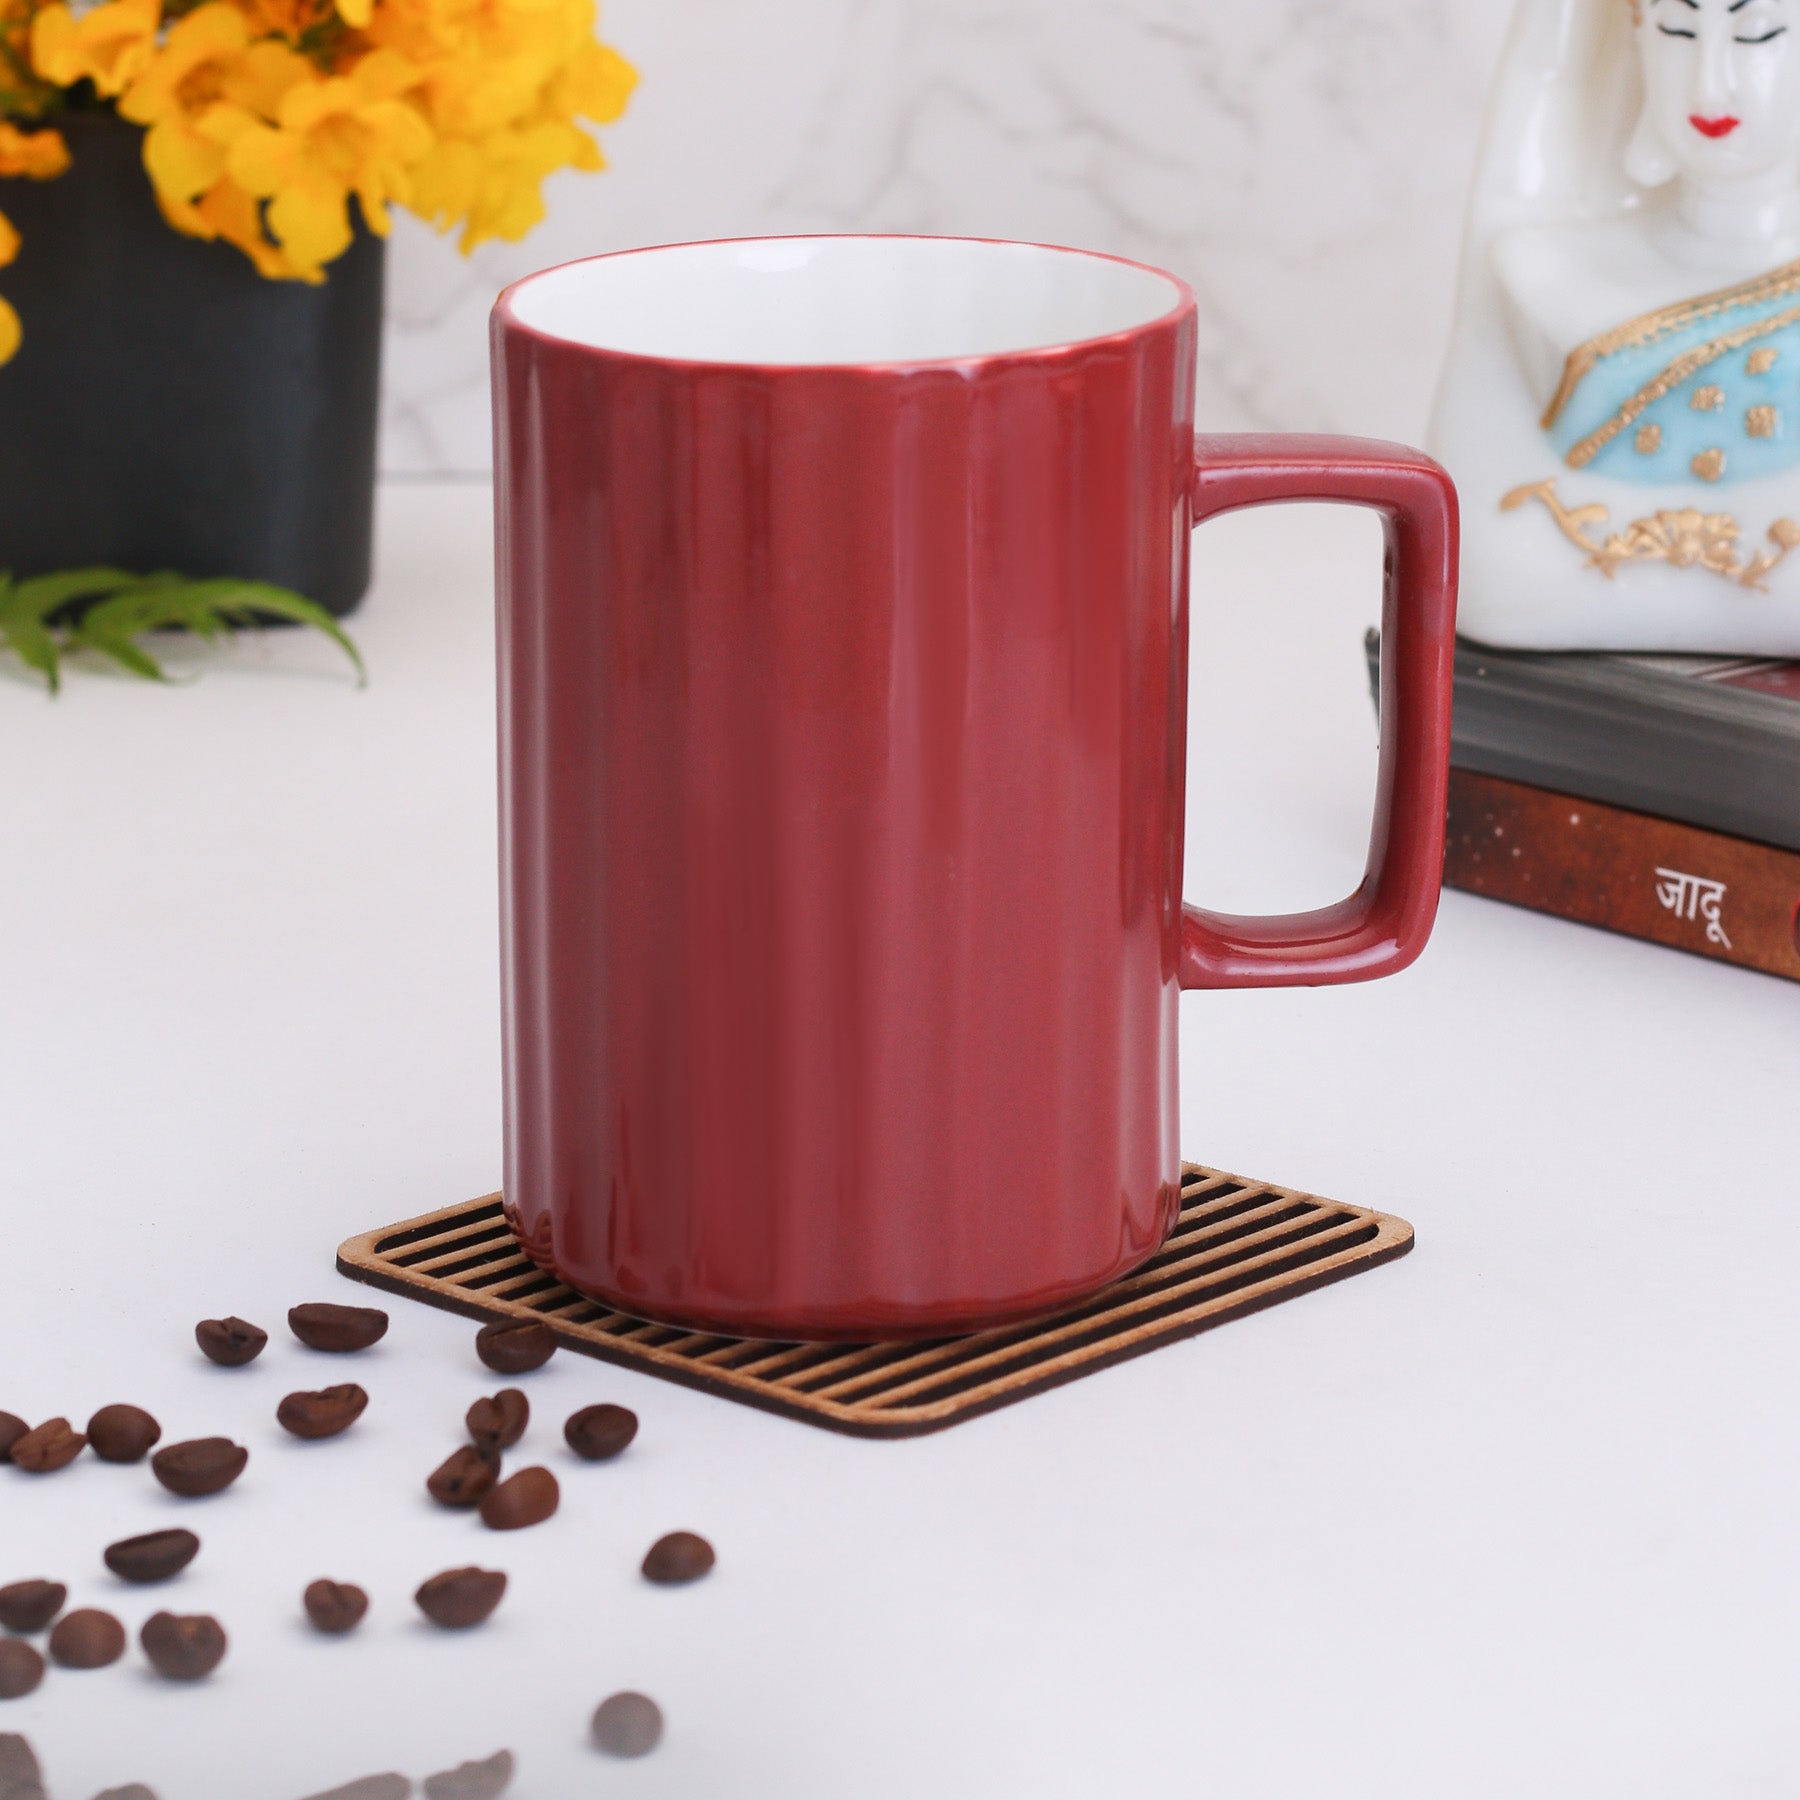 Ritz Creme Coffee & Milk Mug, 300ml, 1 Piece (R|2) - Clay Craft India